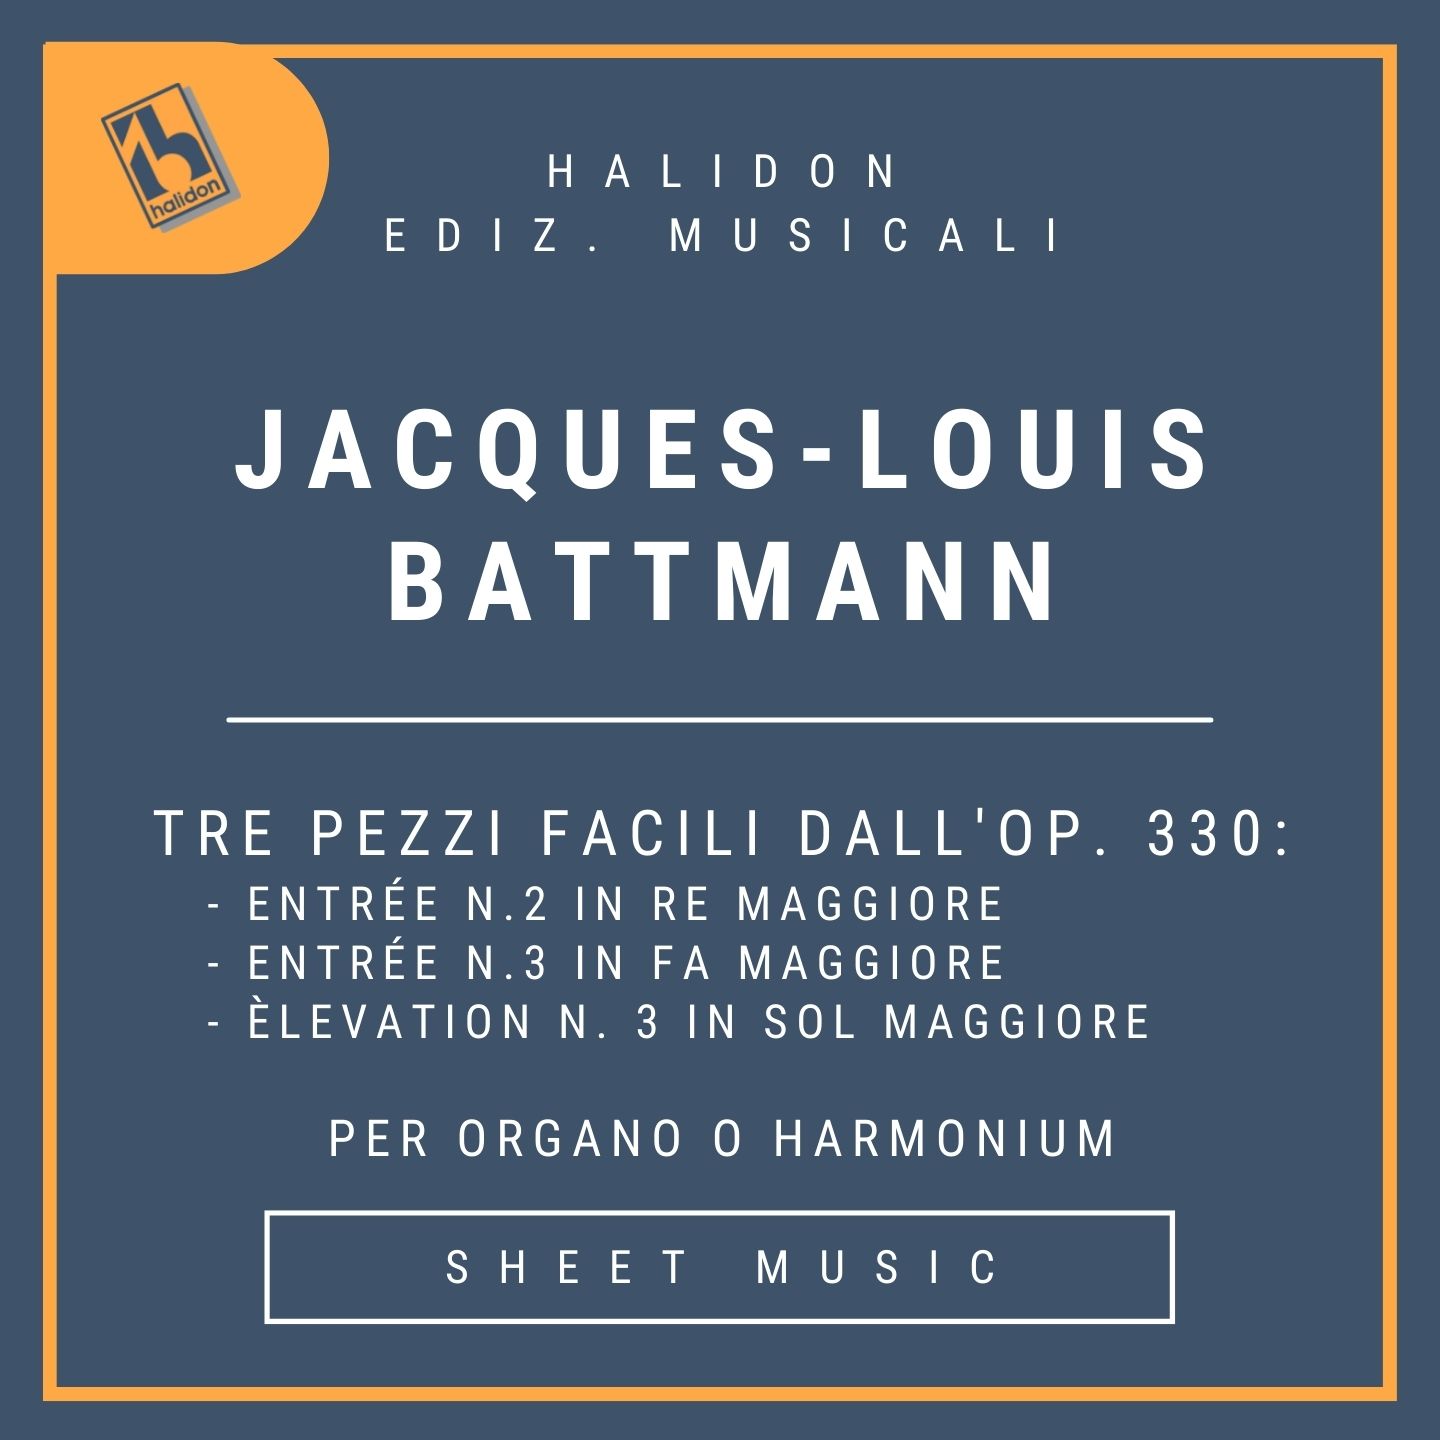 Jacques-Louis Battmann - Three easy pieces for organ from op. 330: Entrées n. 2 & n. 3, Élevation n. 3